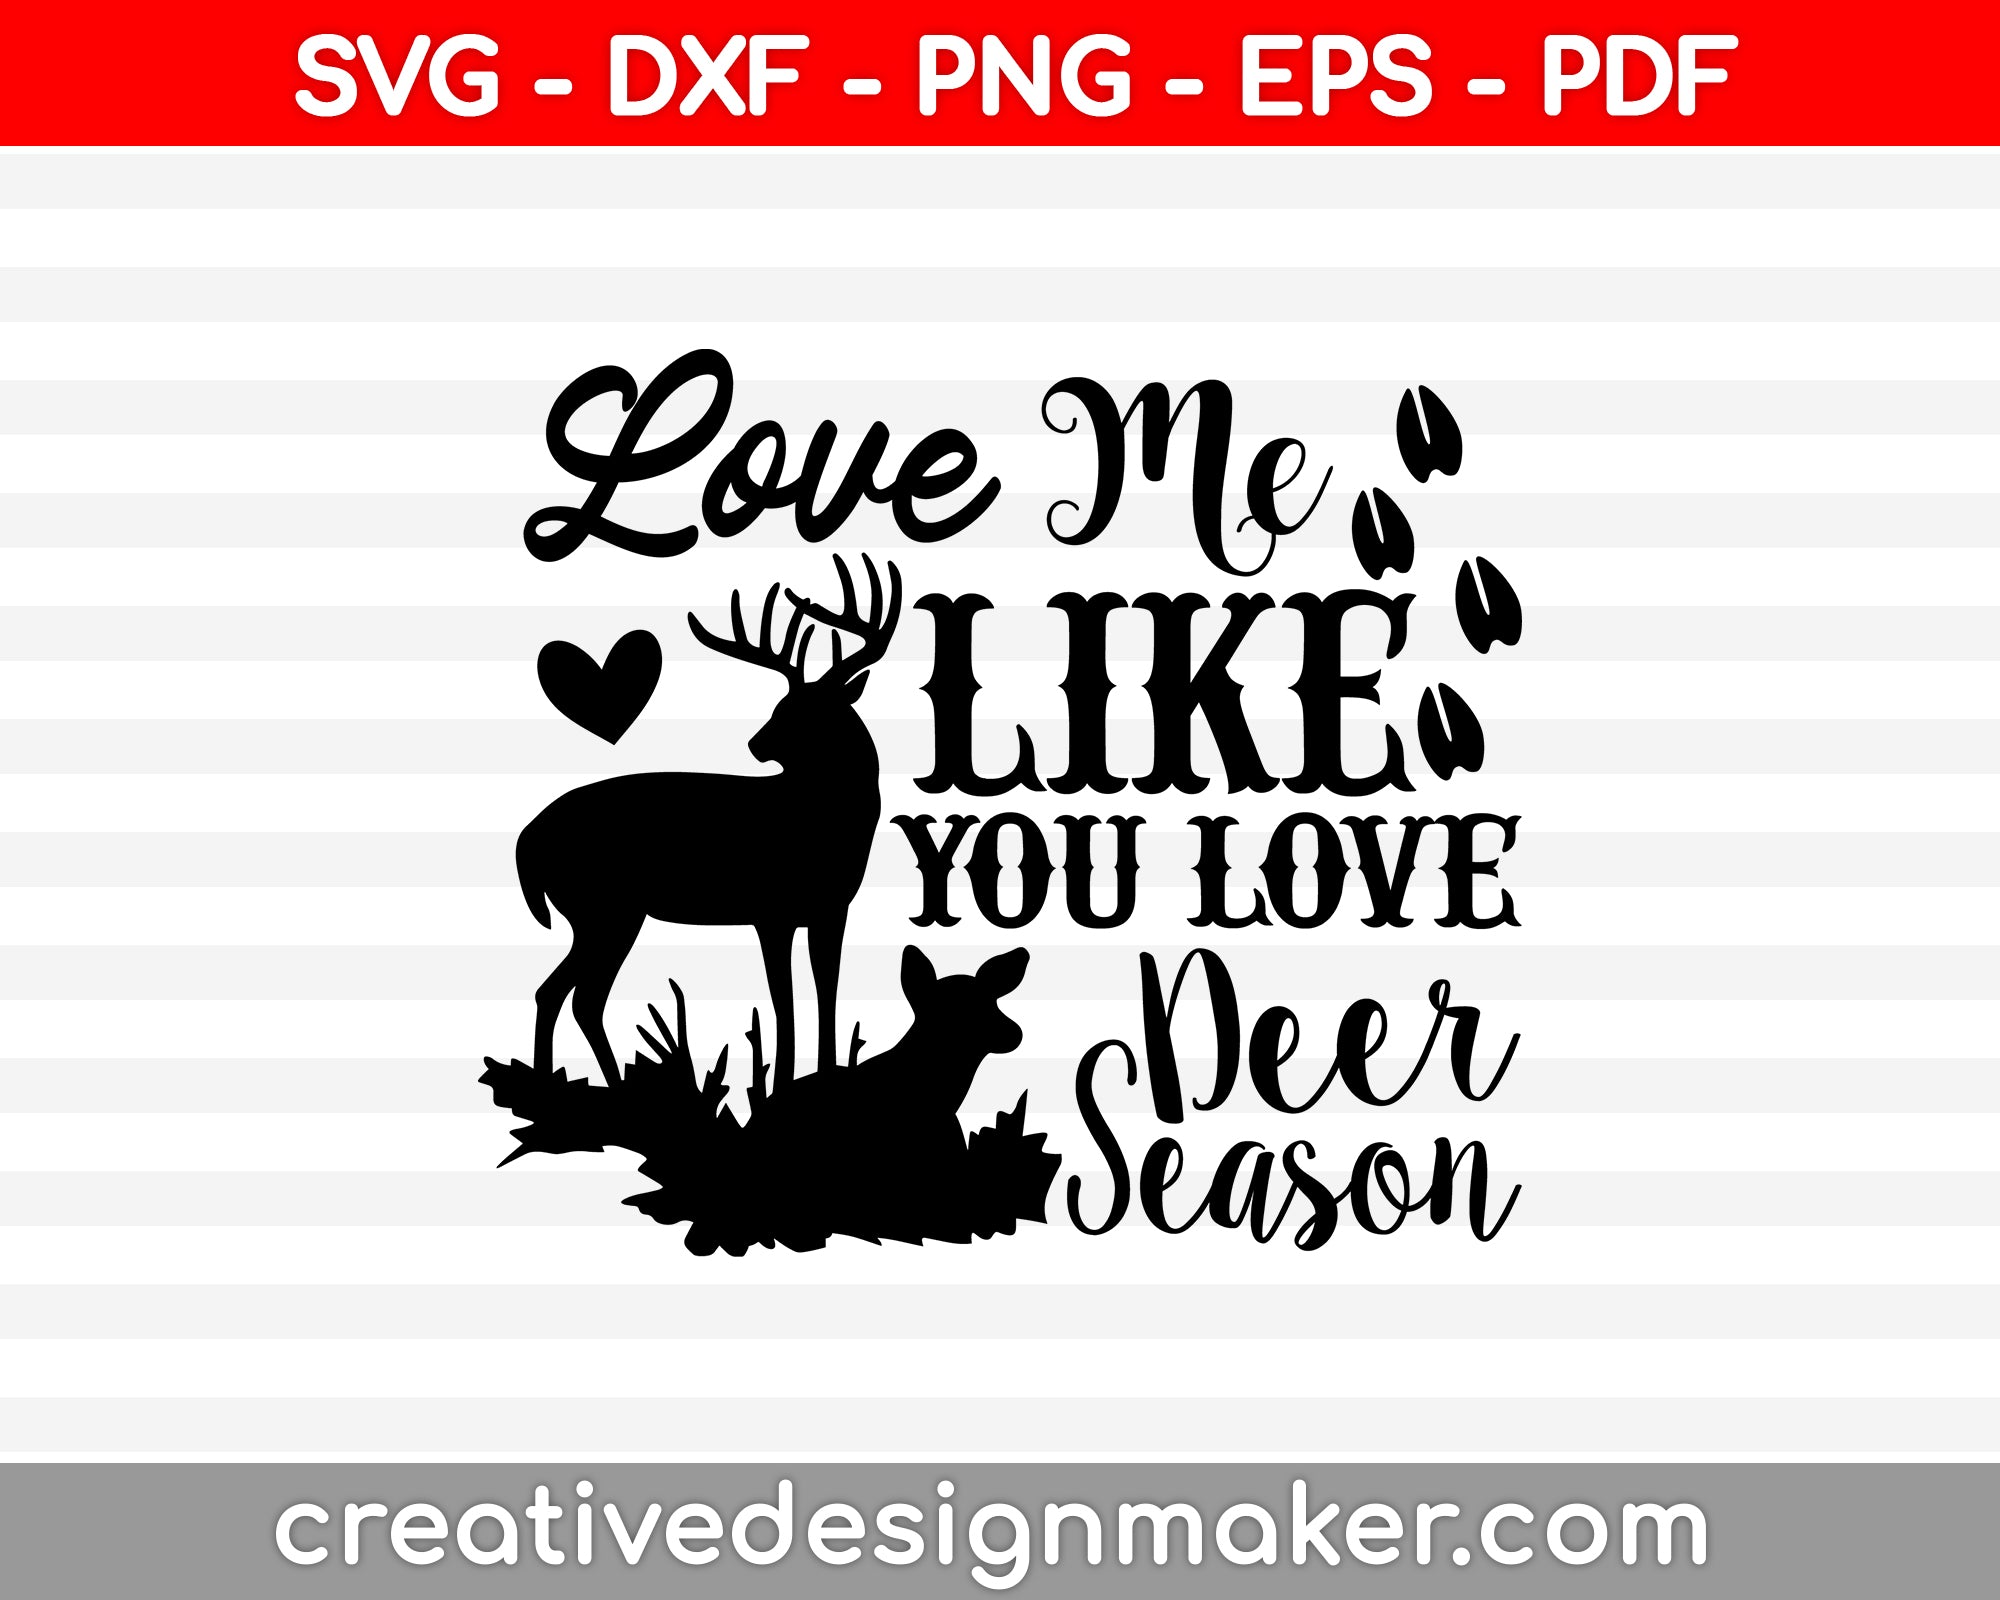 Love Me Like You Love Deer Season SVG PNG Cutting Printable Files